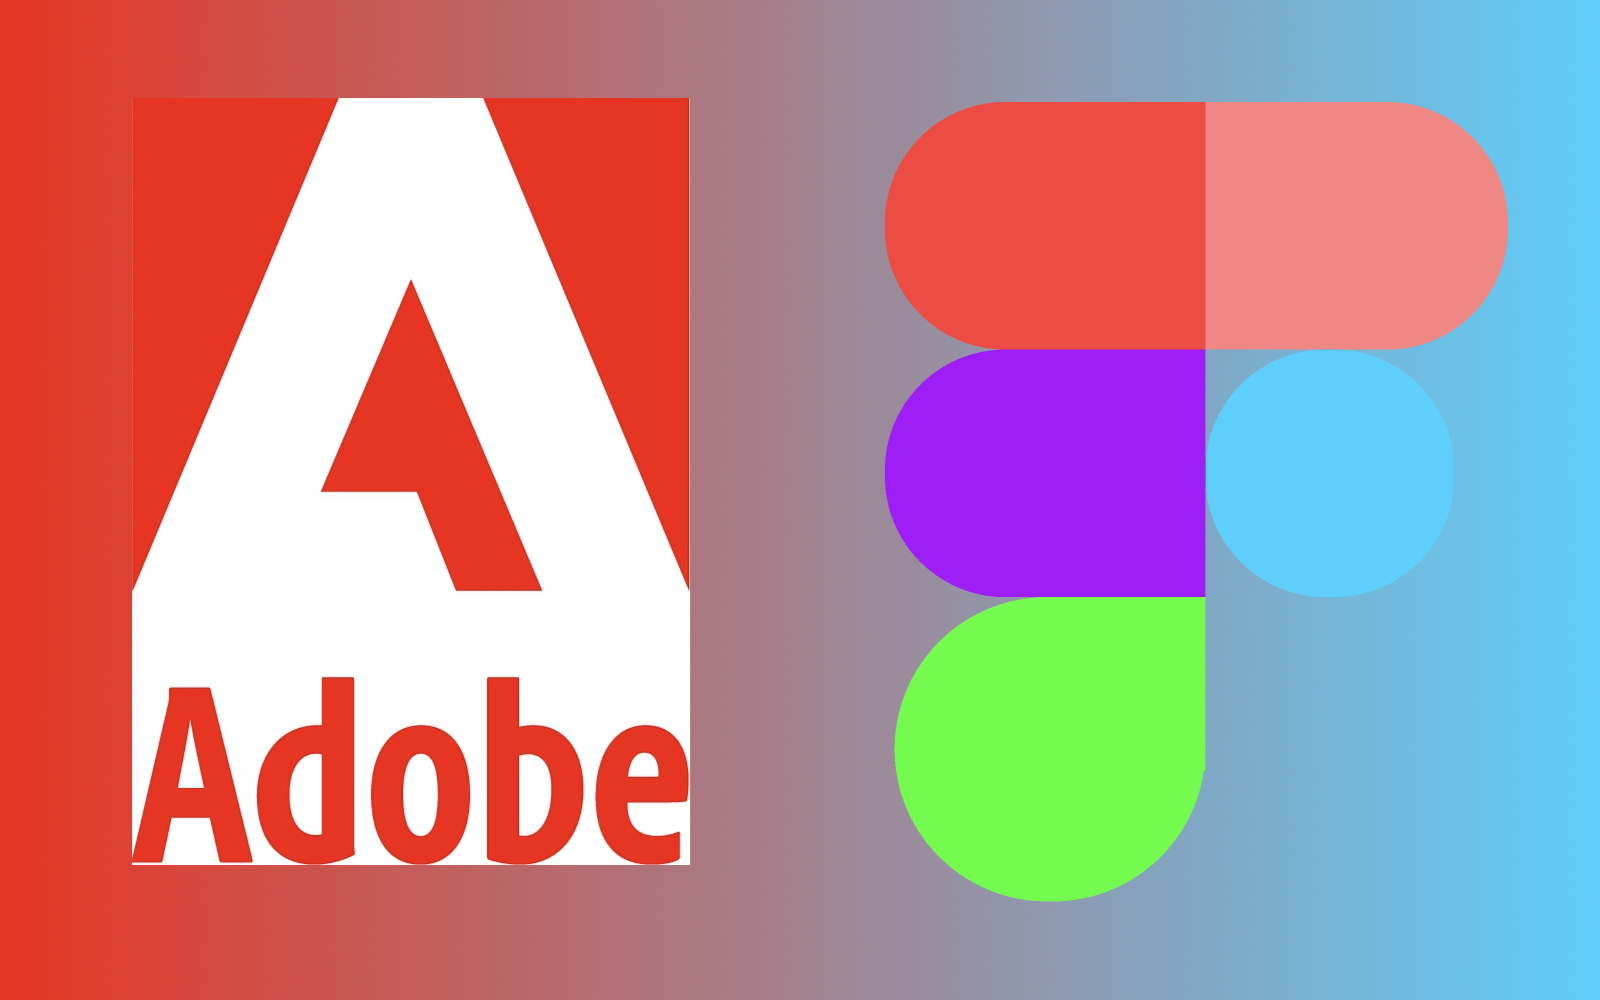 Adobe is buying figma